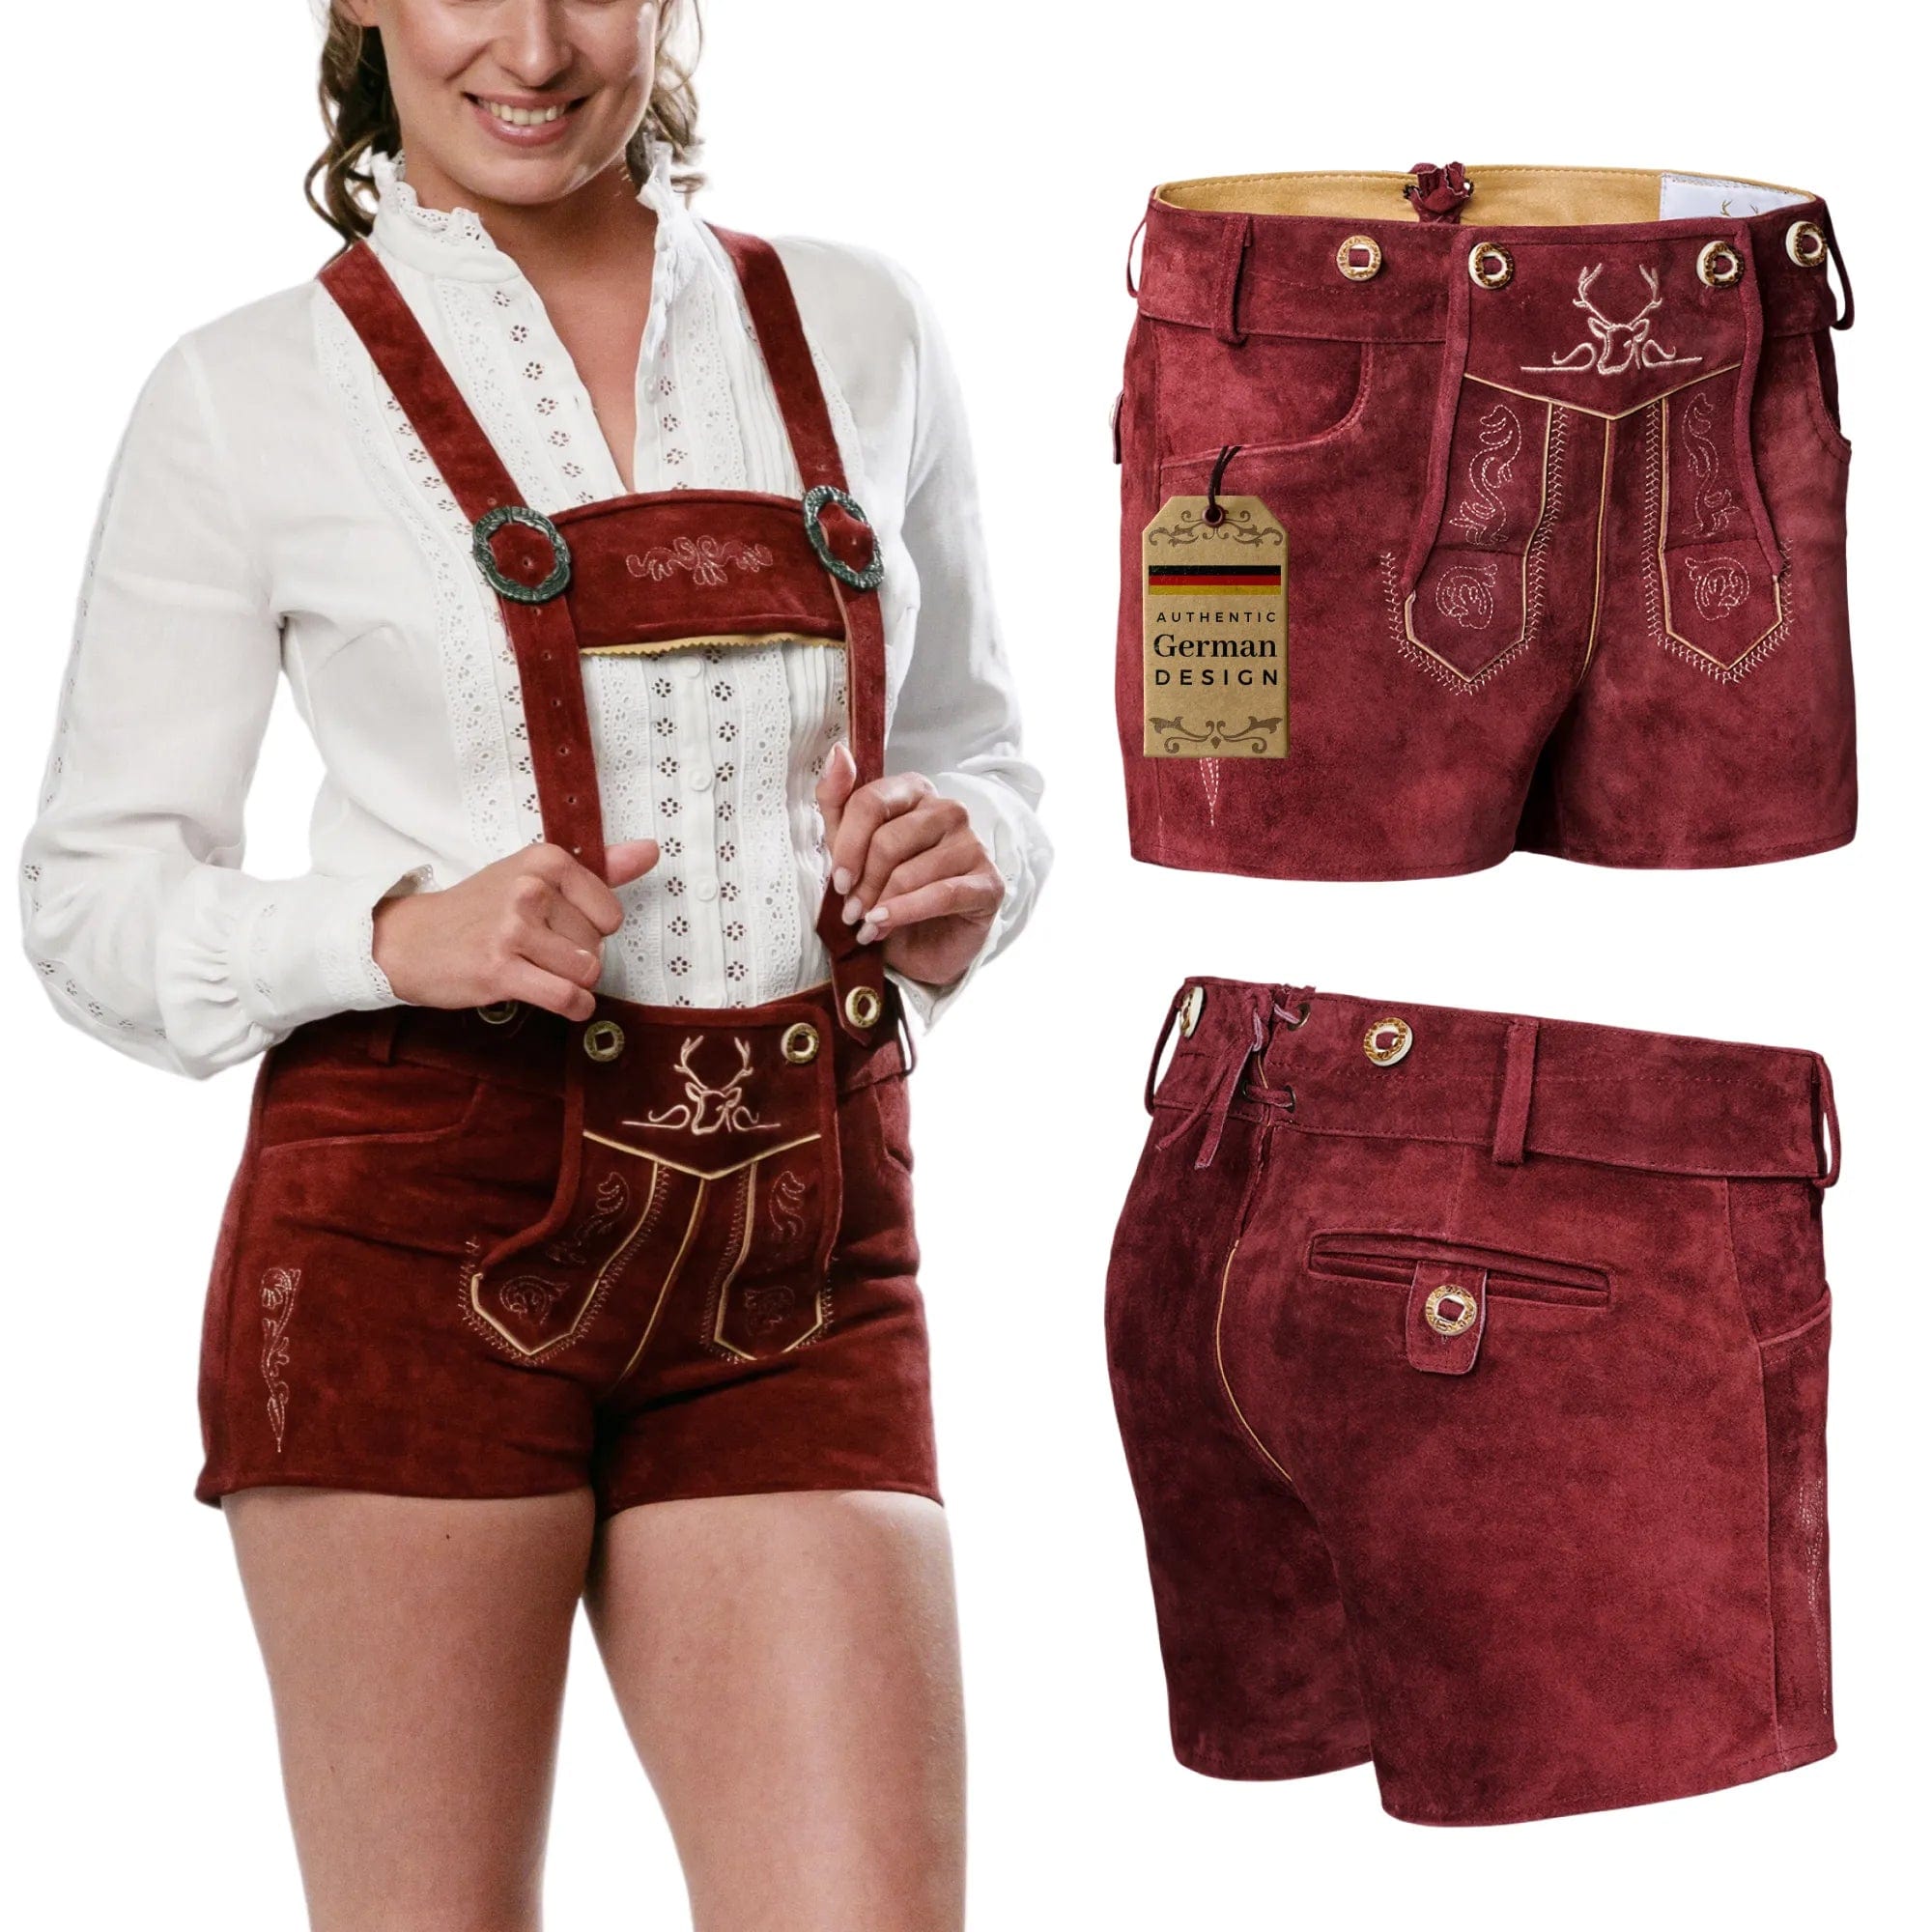 Bavaria Trachten Lederhosen Women Hotpant Cherry Red Oktoberfest 